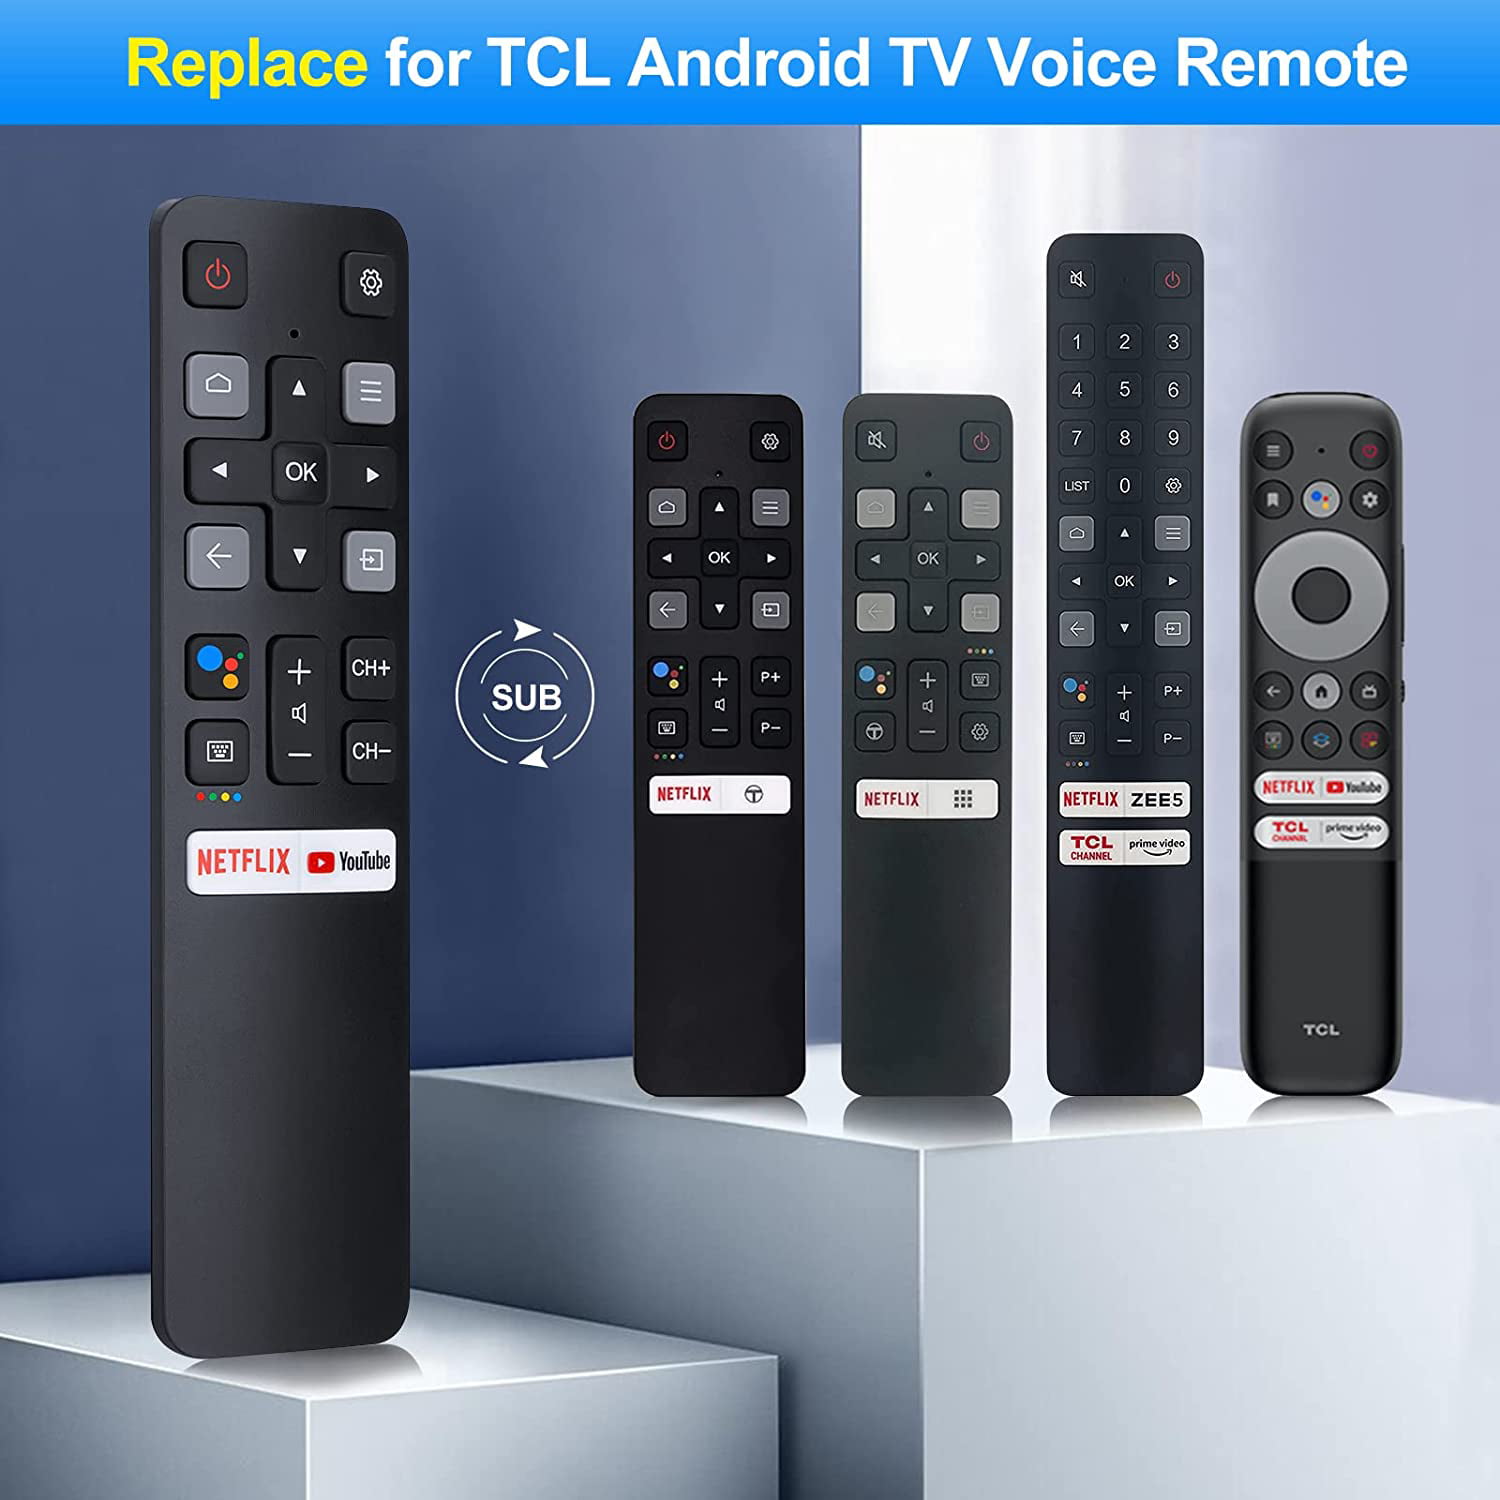 TCL Smart TV Remote – Applications sur Google Play